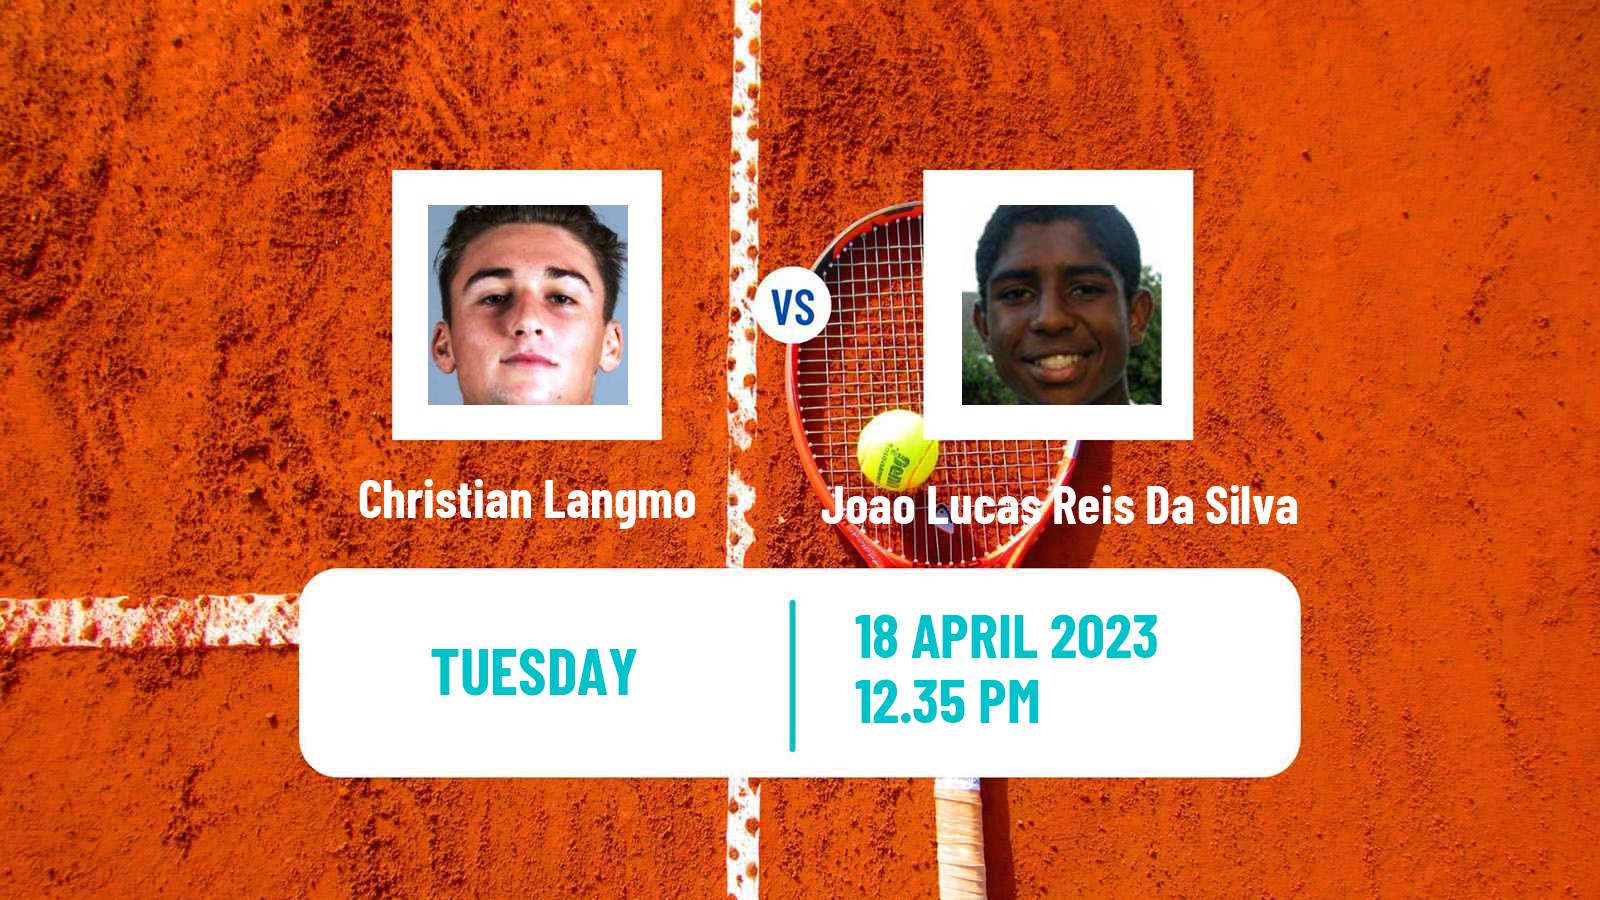 Tennis ATP Challenger Christian Langmo - Joao Lucas Reis Da Silva